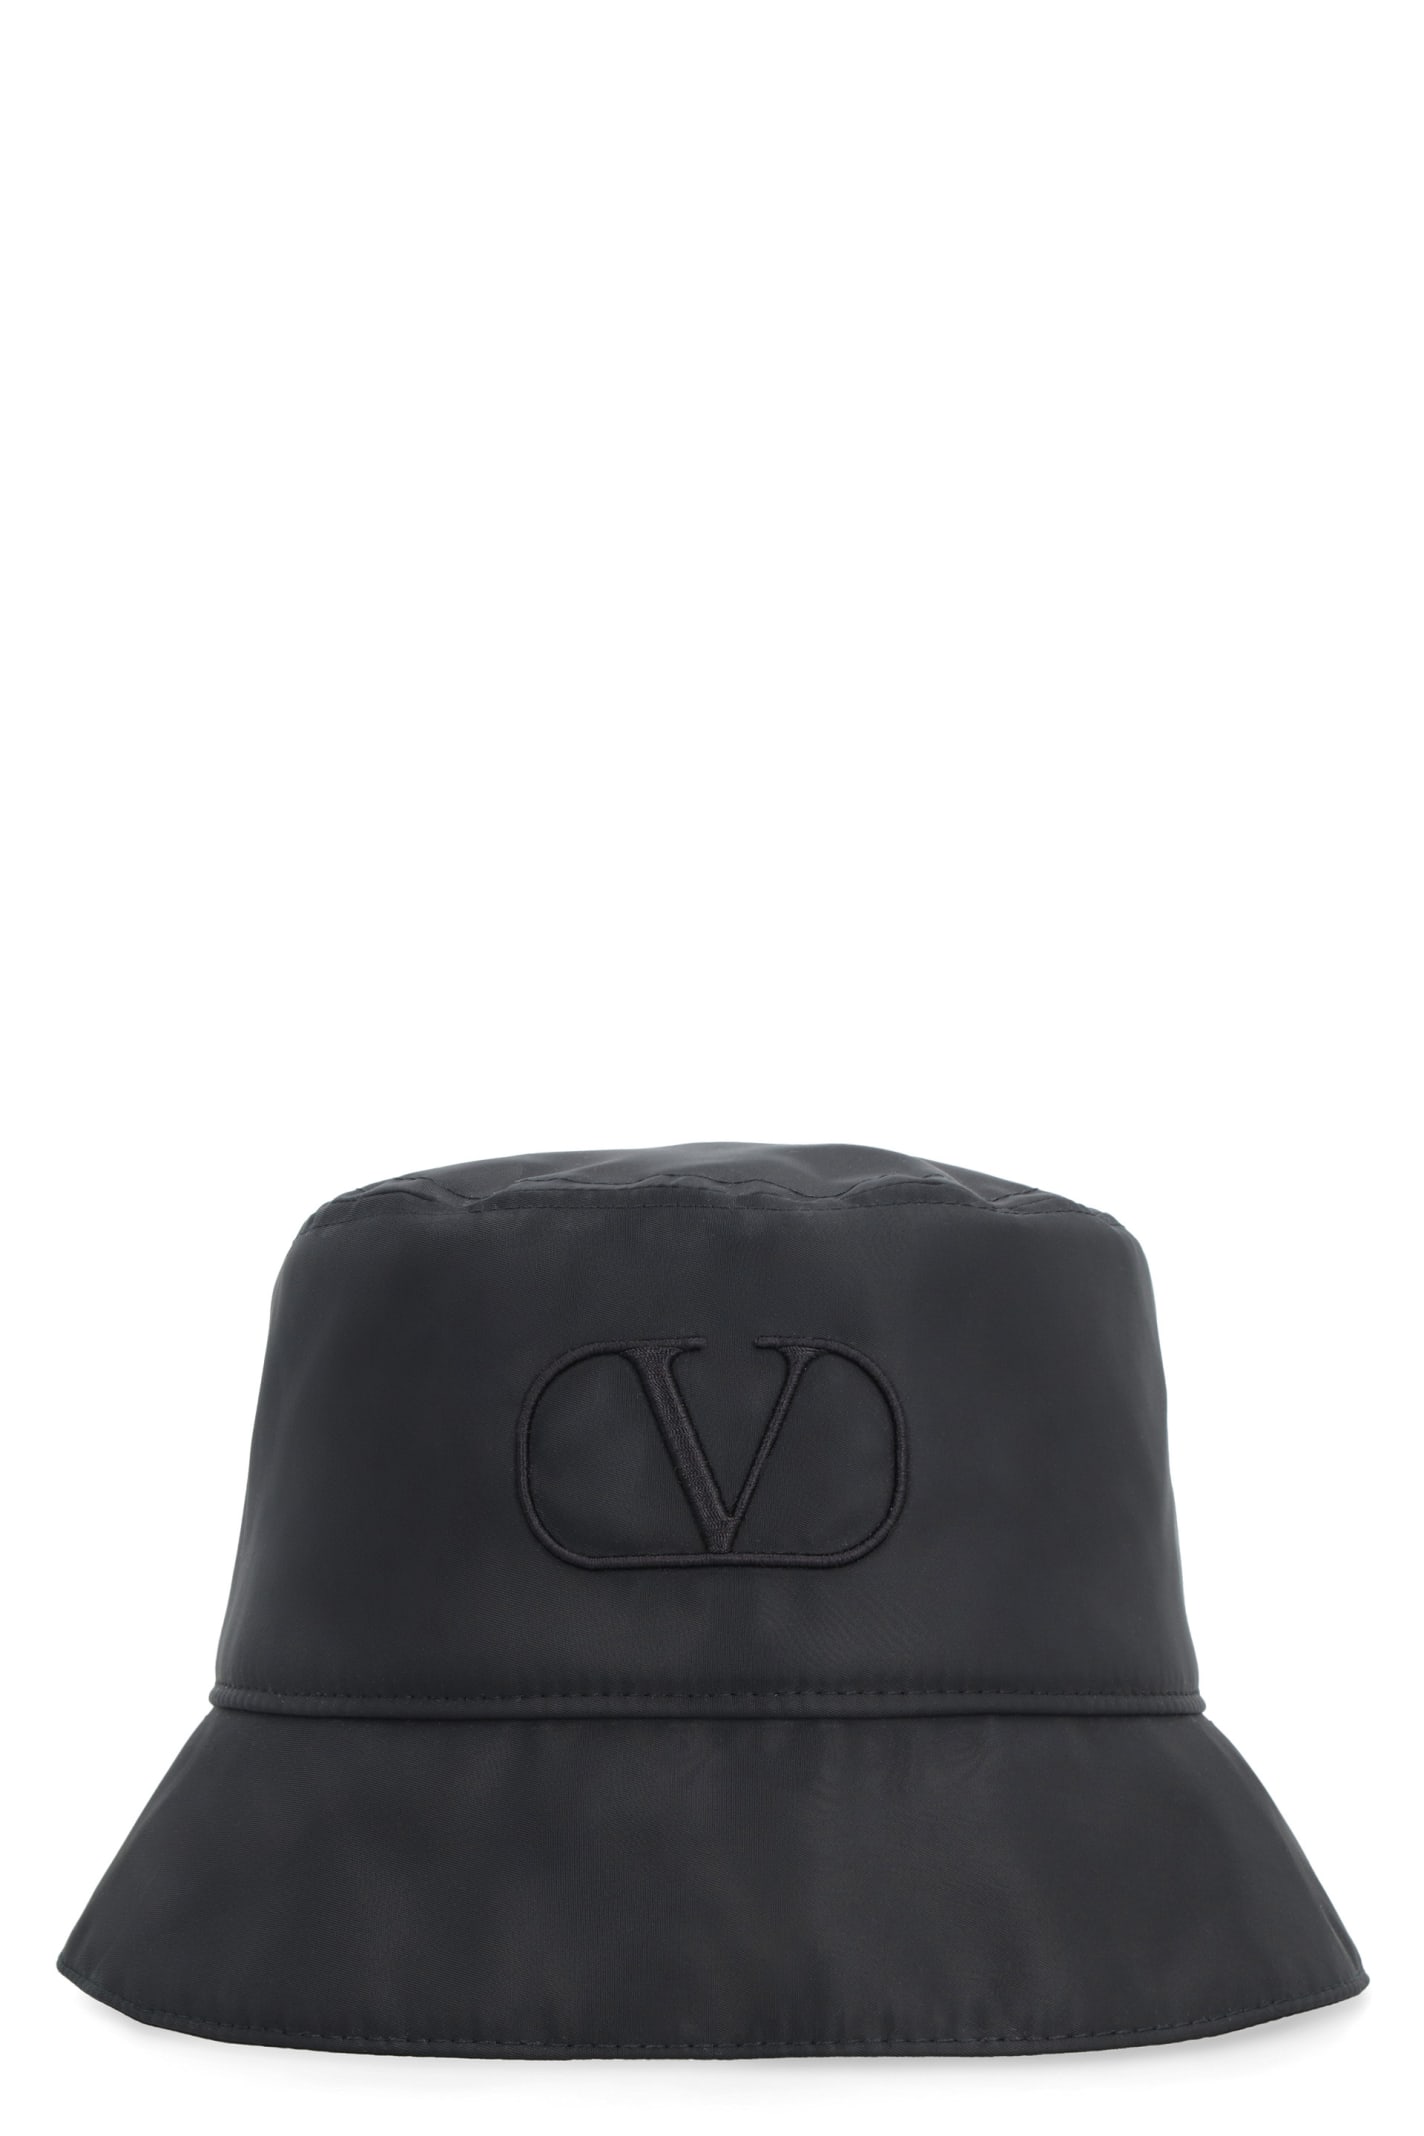 Valentino Garavani - Vlogo Signature Bucket Hat